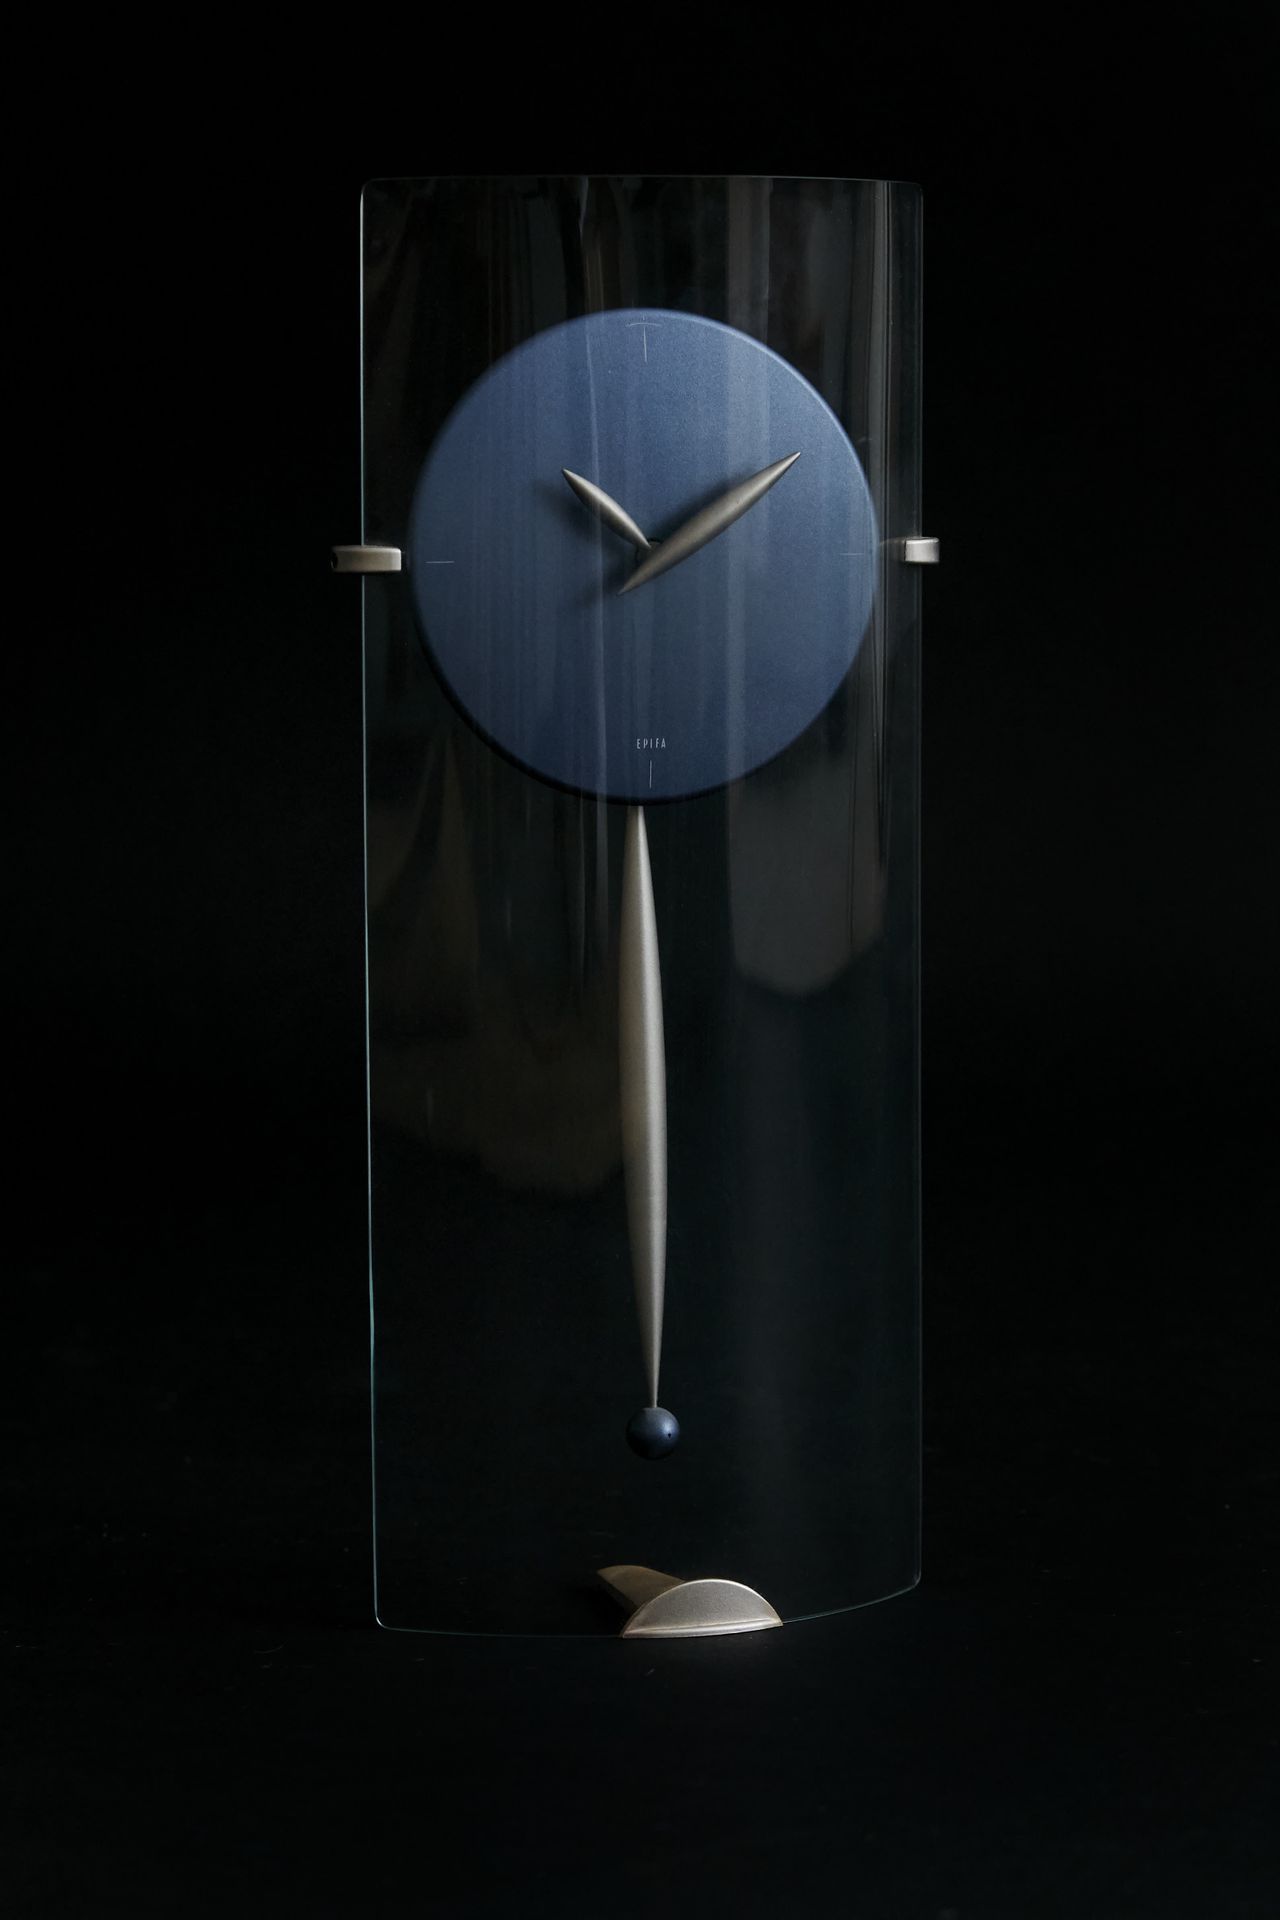 Takashi Kato 时钟---------
玻璃和塑料---Epifa版
创作日期：1990年左右
高35厘米